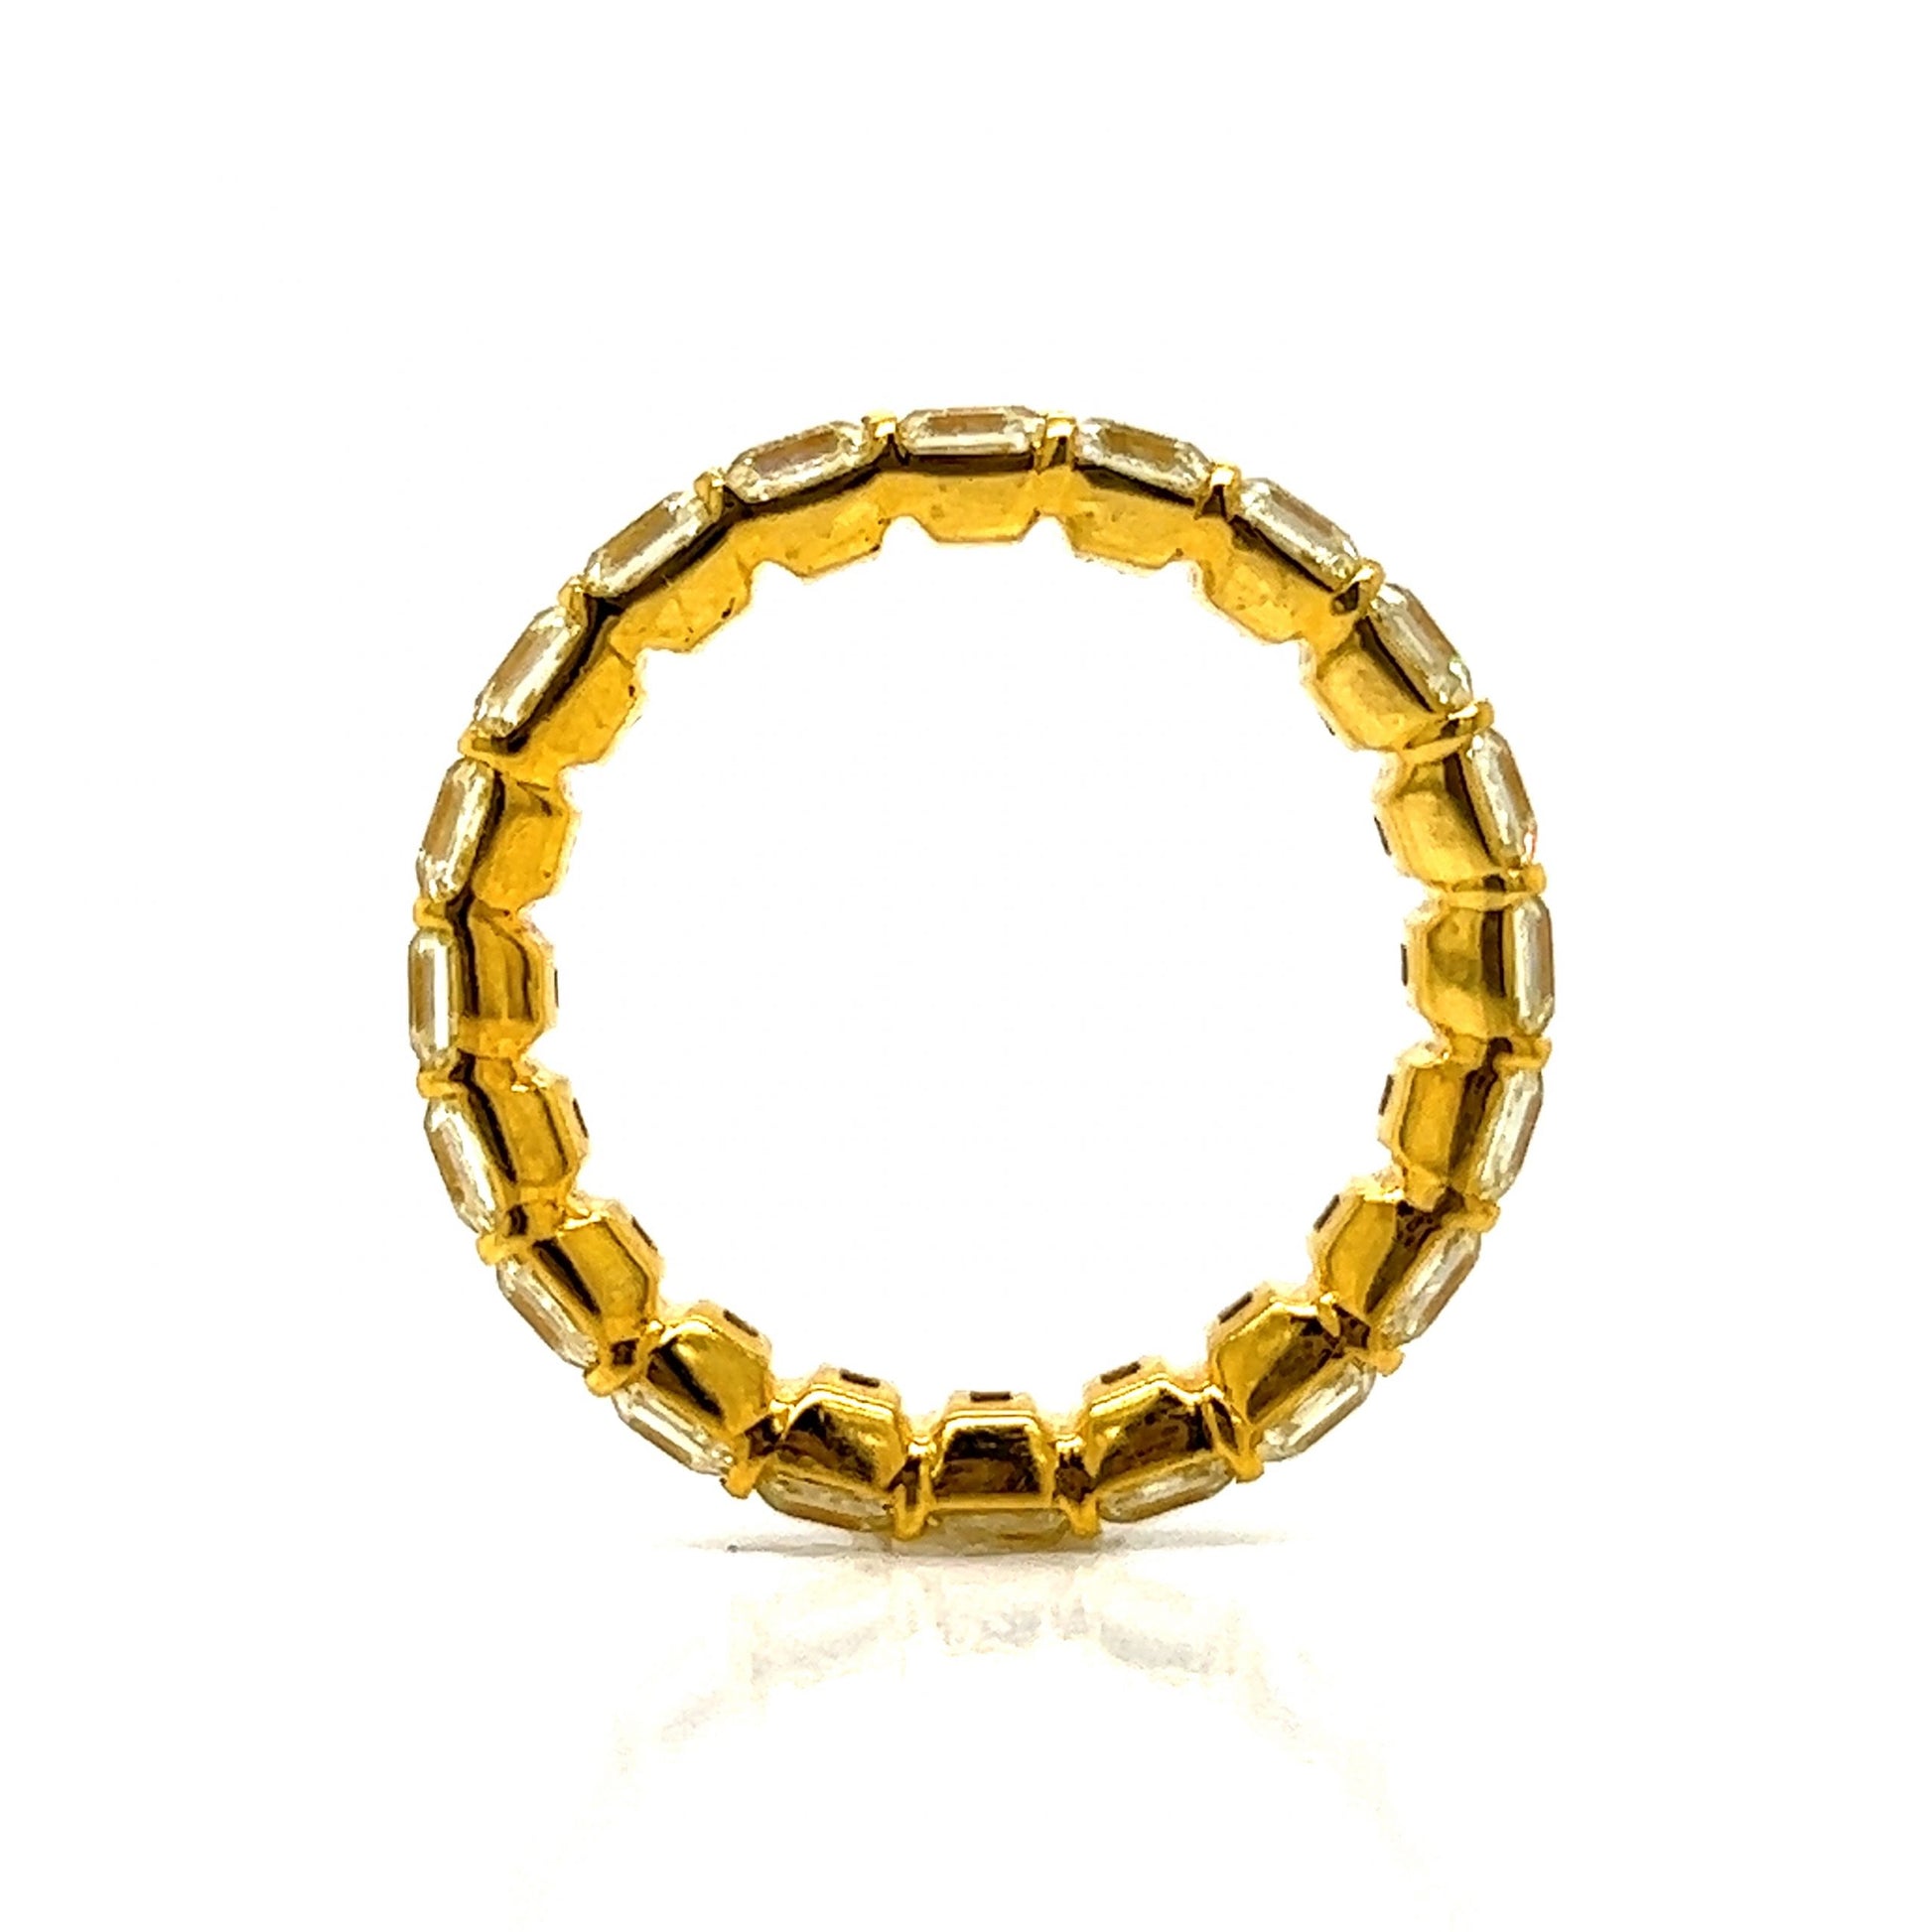 5.56 Fancy Yellow Asscher Cut Diamond Eternity Band in 18kComposition: 18 Karat Yellow Gold Ring Size: 7 Total Diamond Weight: 5.56ct Total Gram Weight: 3.5 g